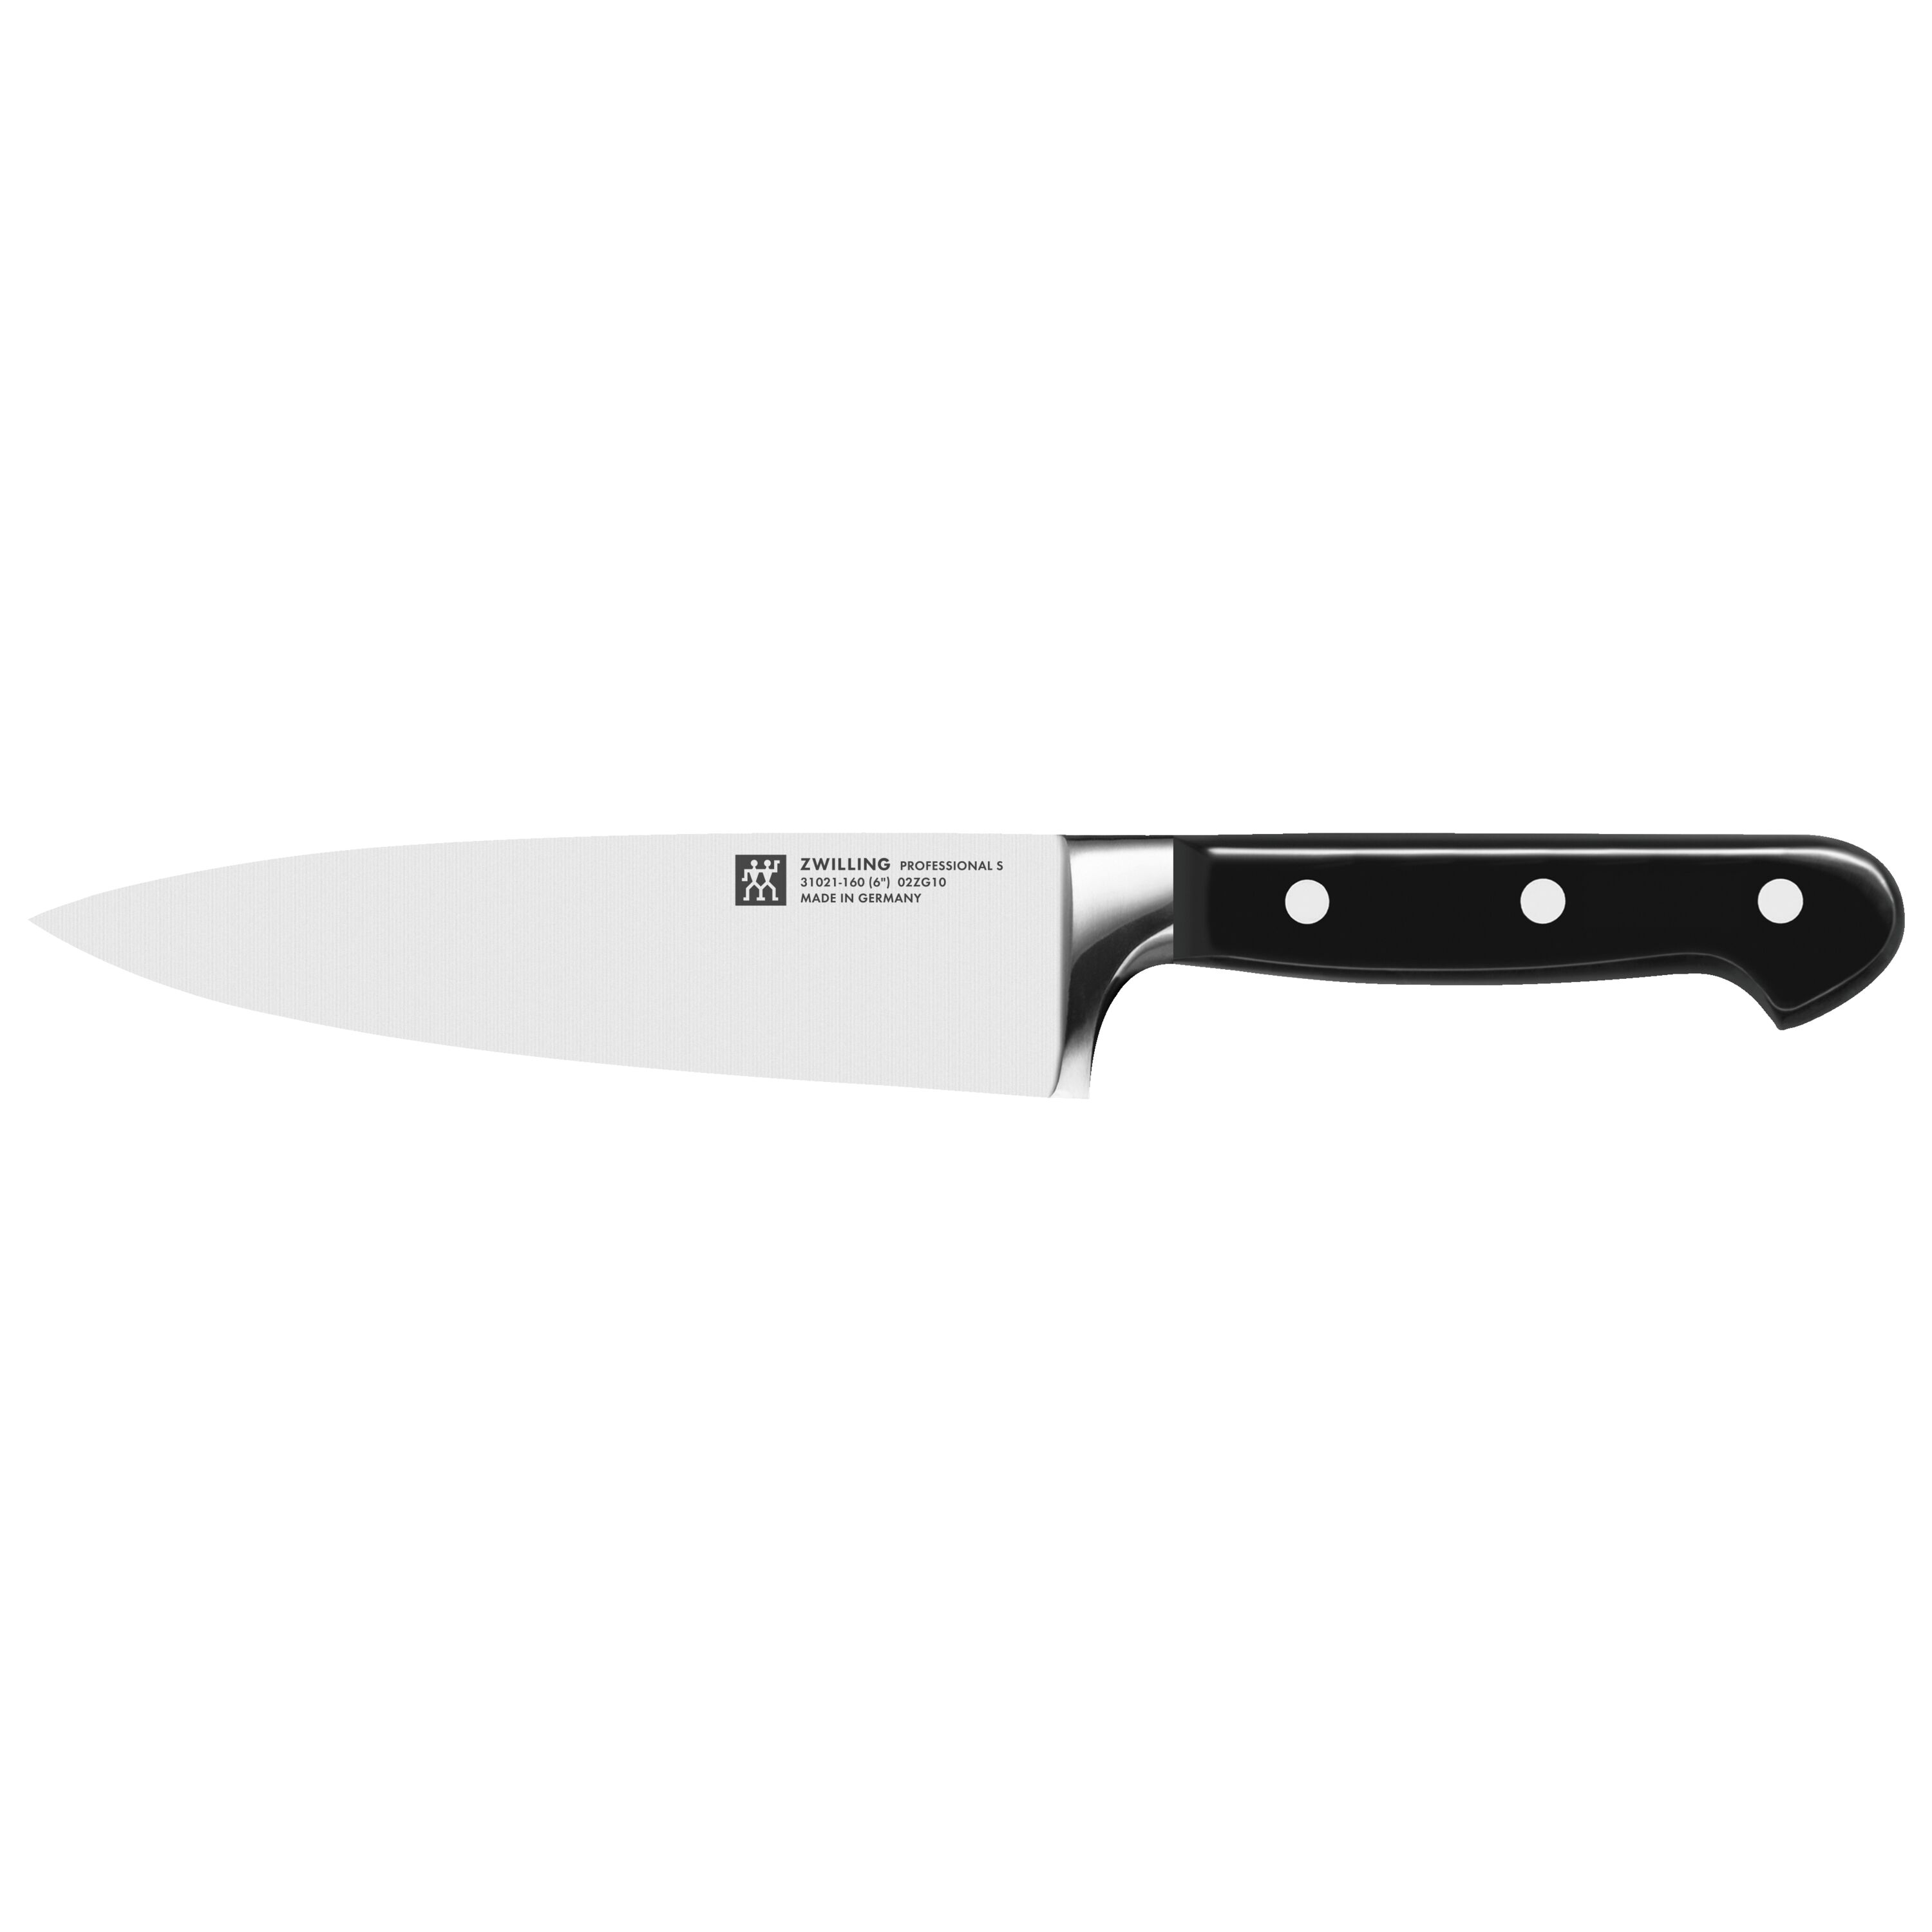 Zwilling J.a Henckels Professional s chef cuchillos y spickmesser cuchillos